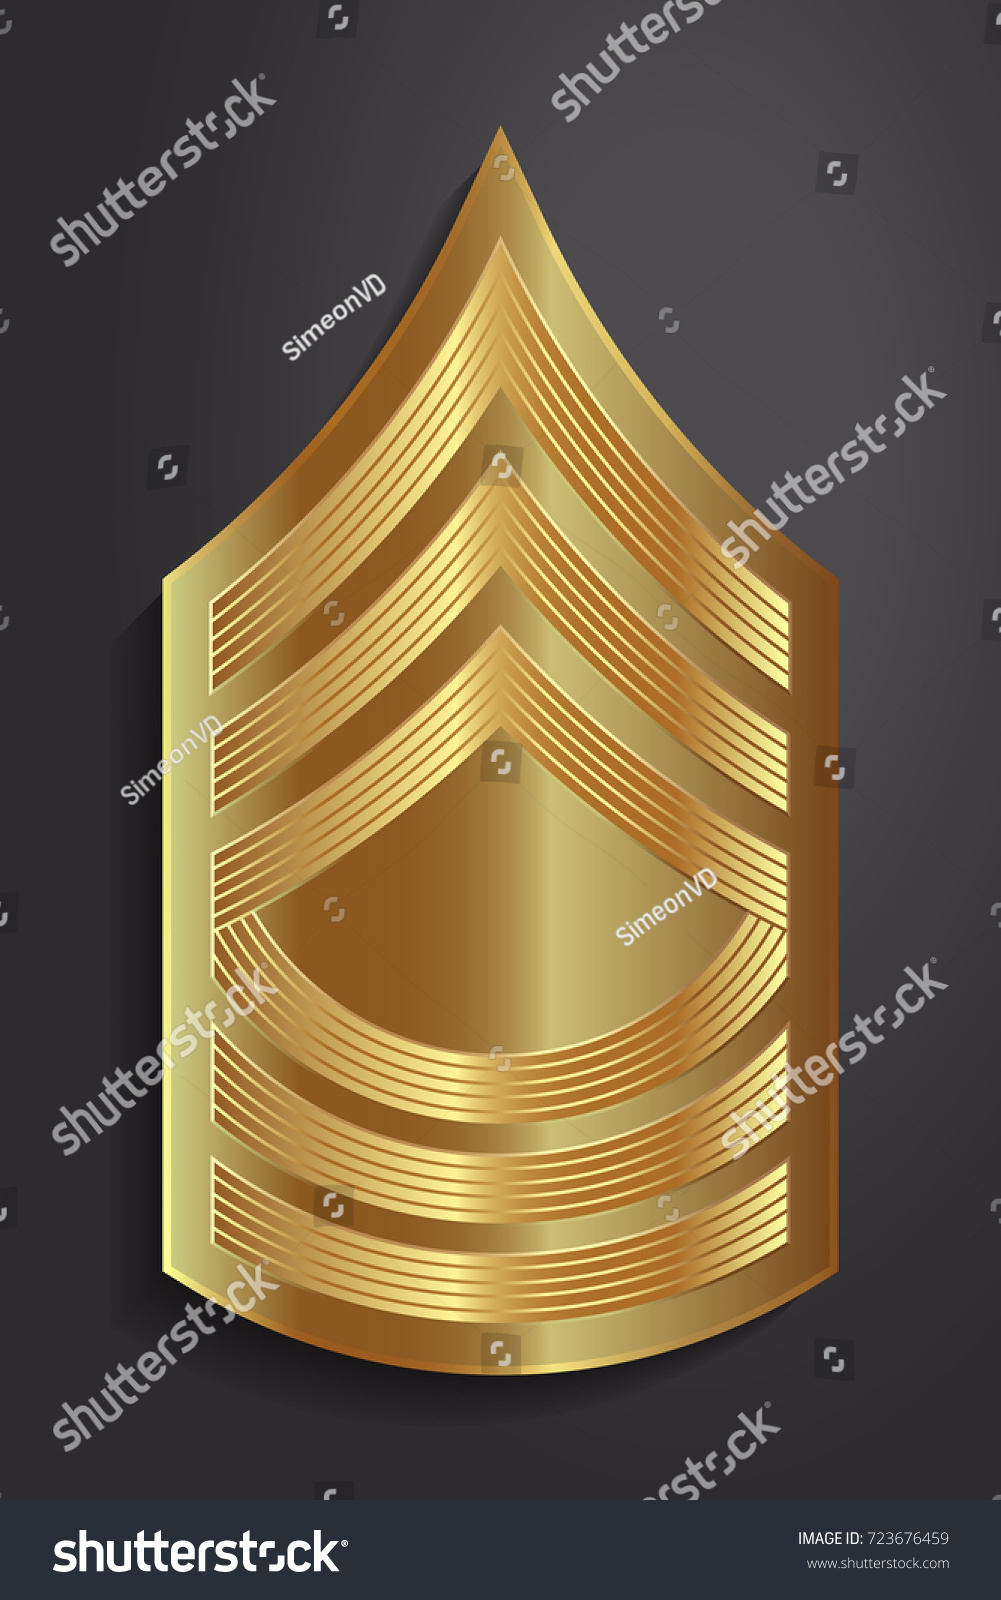 Military Ranks Insignia Stripes Chevrons Army Stock Vector 723676459